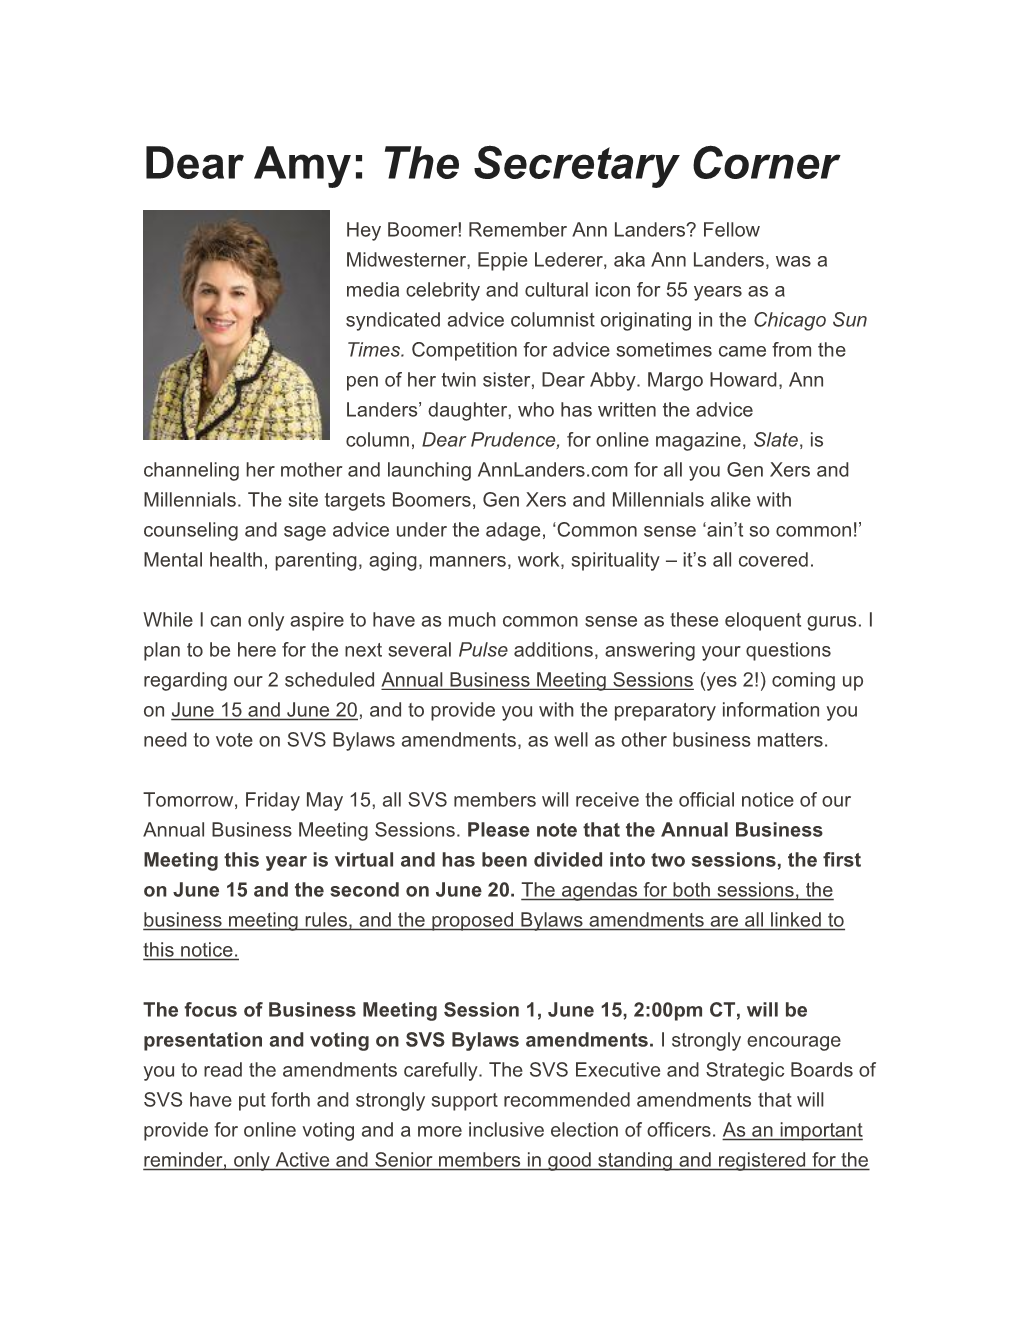 Dear Amy: the Secretary Corner